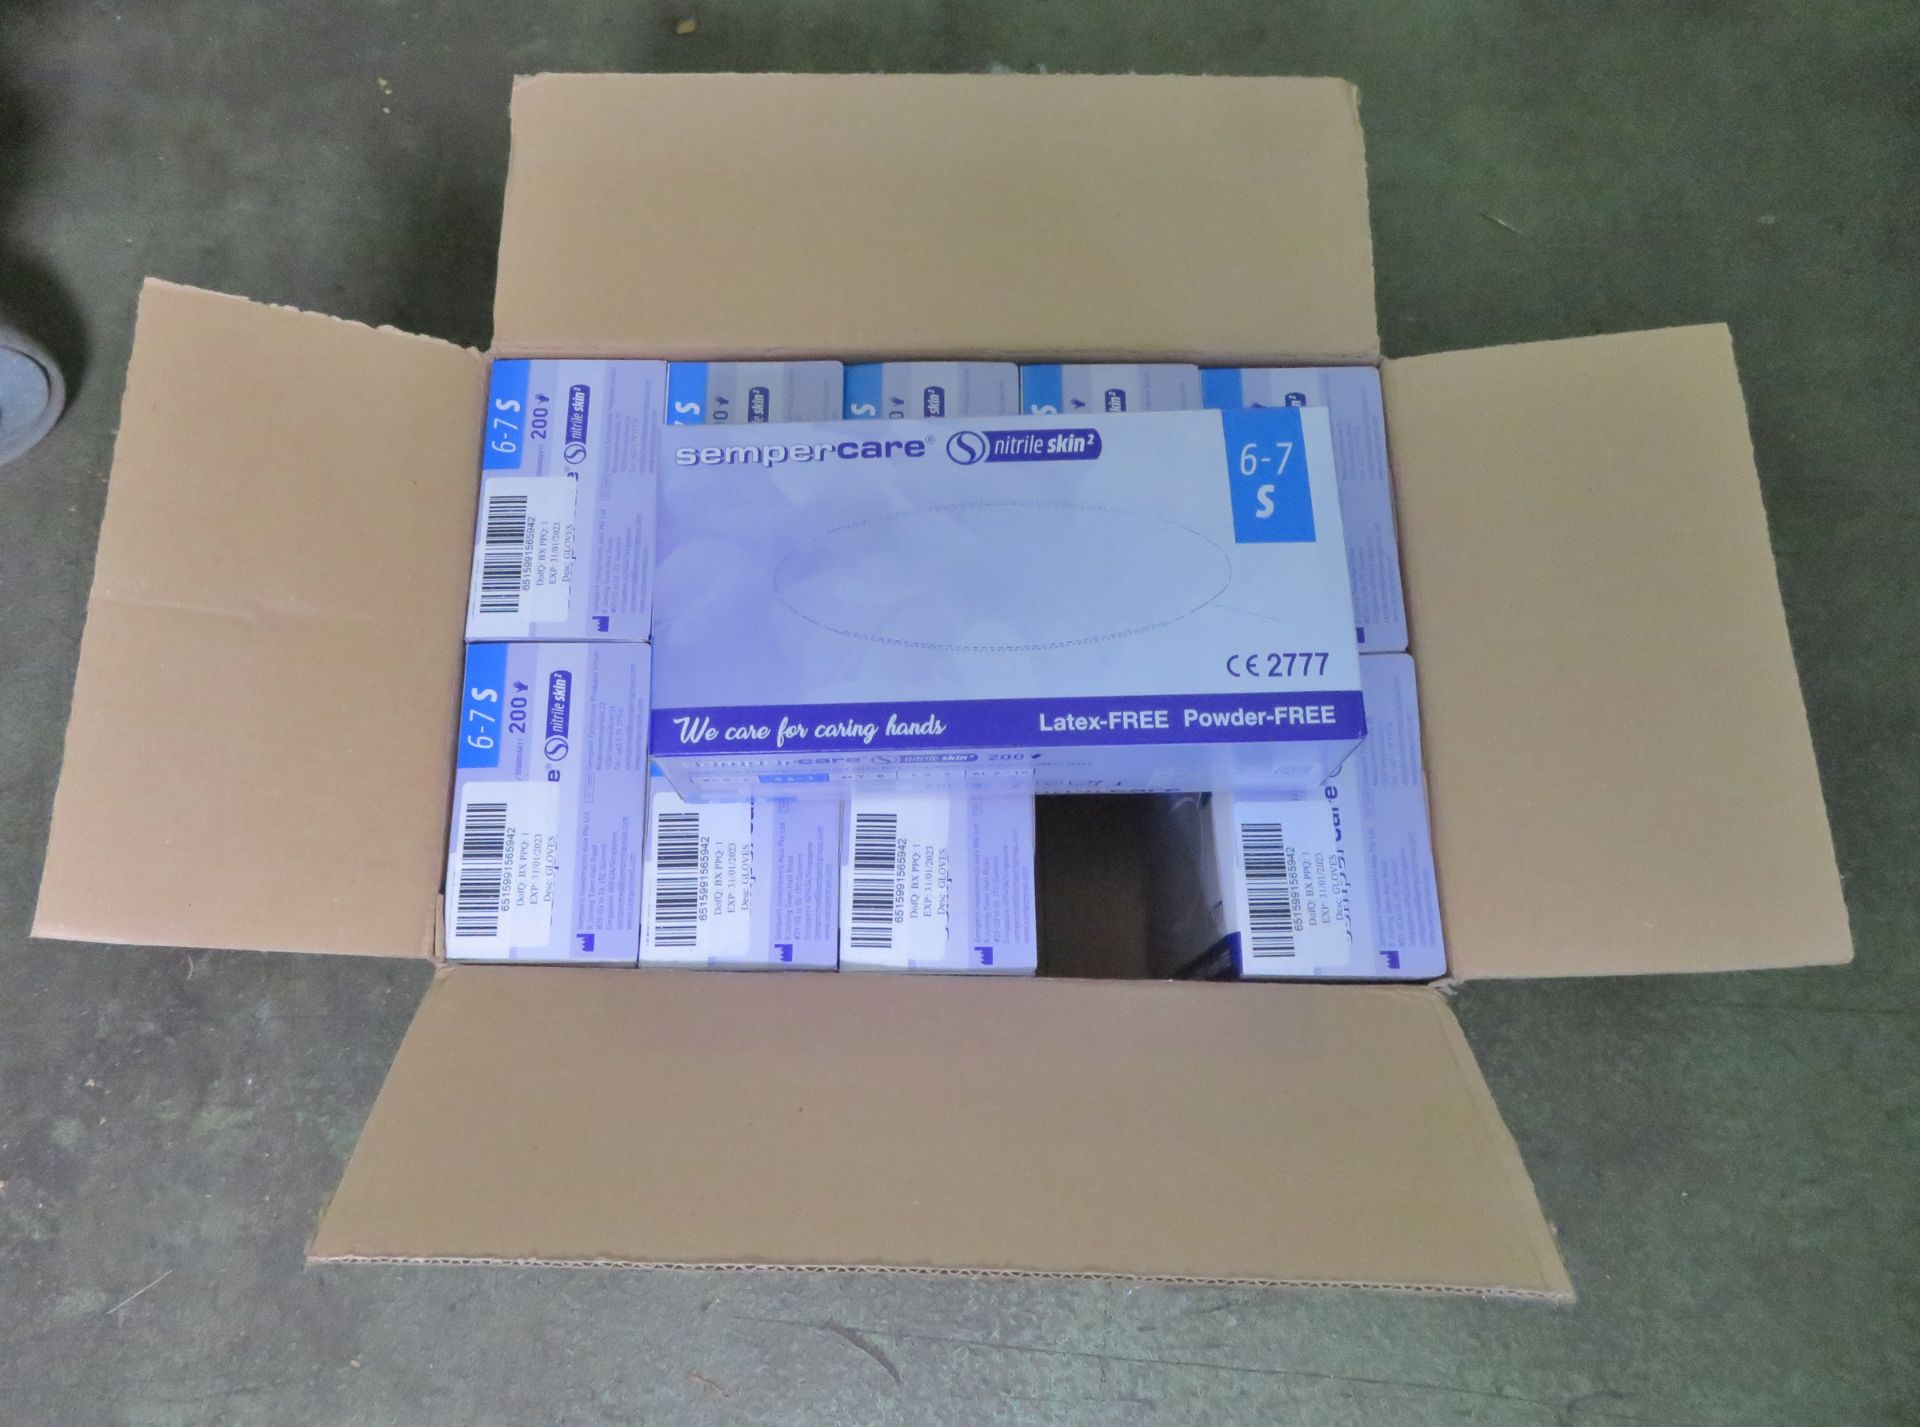 Sempercare Nitrile Skin Examination Gloves S6-7 200 Per Box - 10 boxes